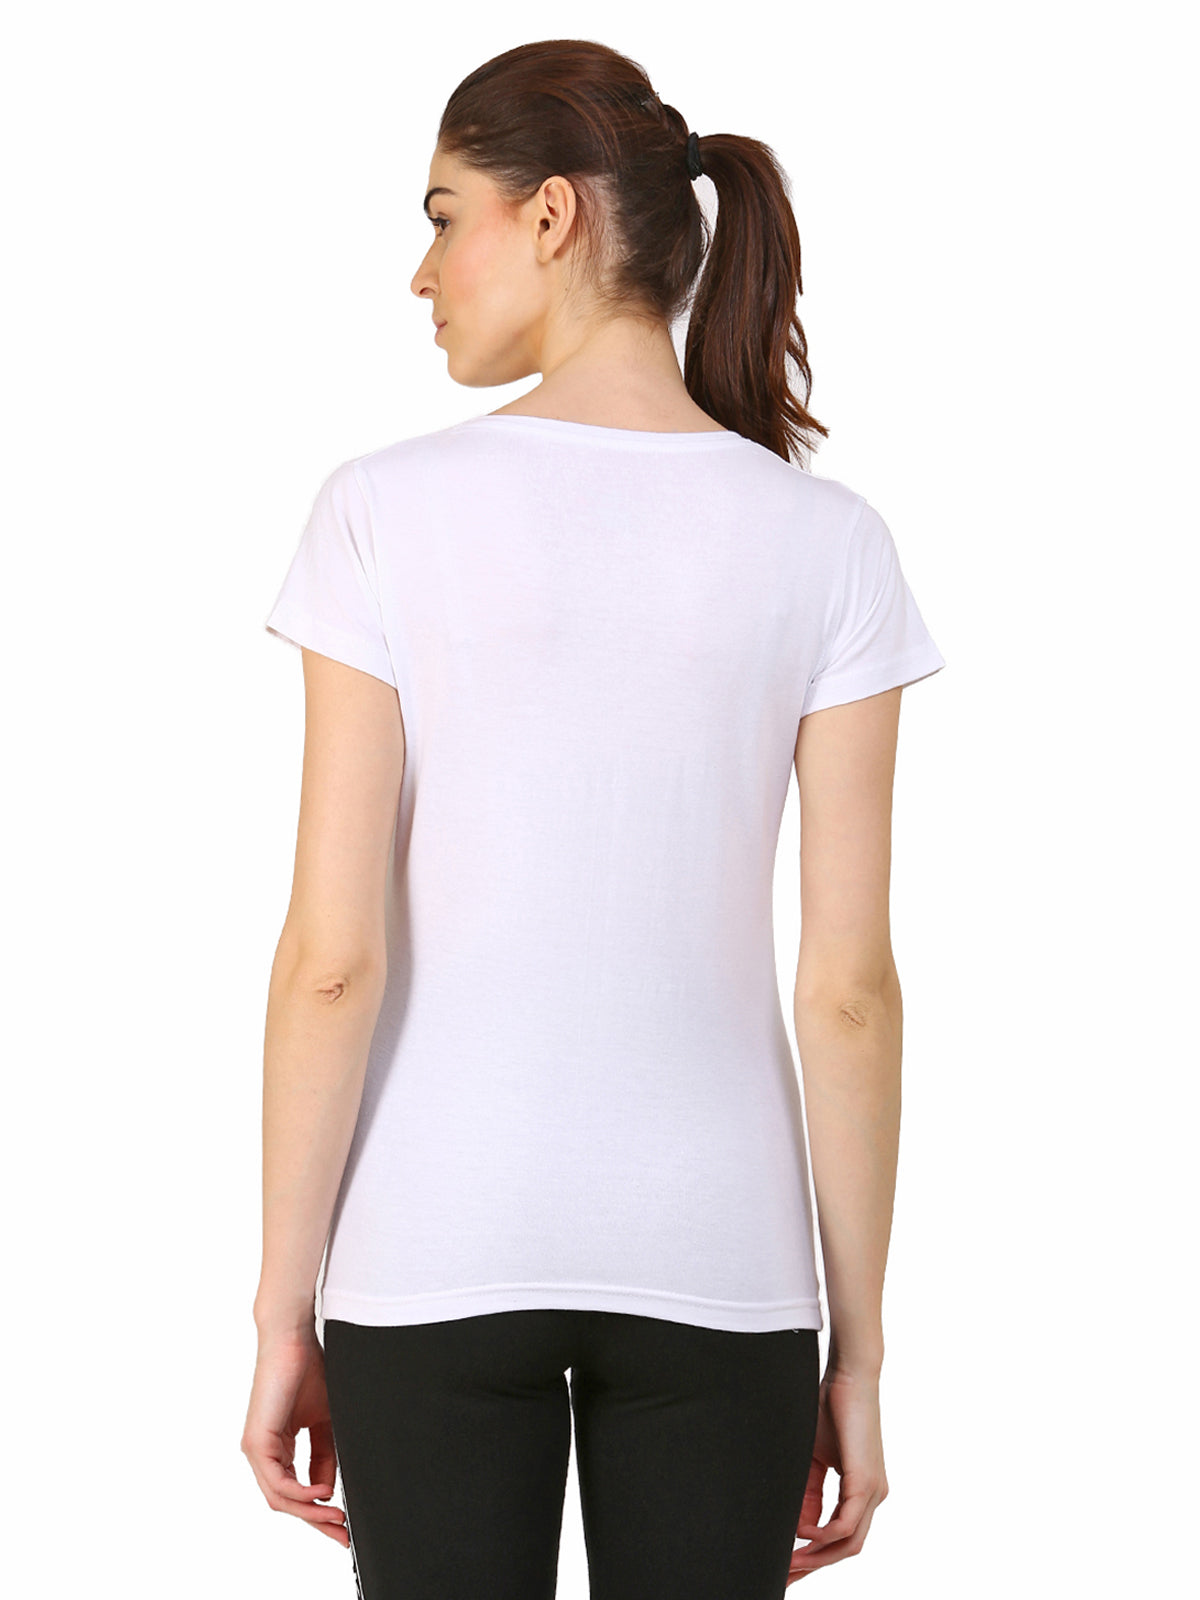 Ap'pulse Women's Short Sleeve Round neck Tshirt